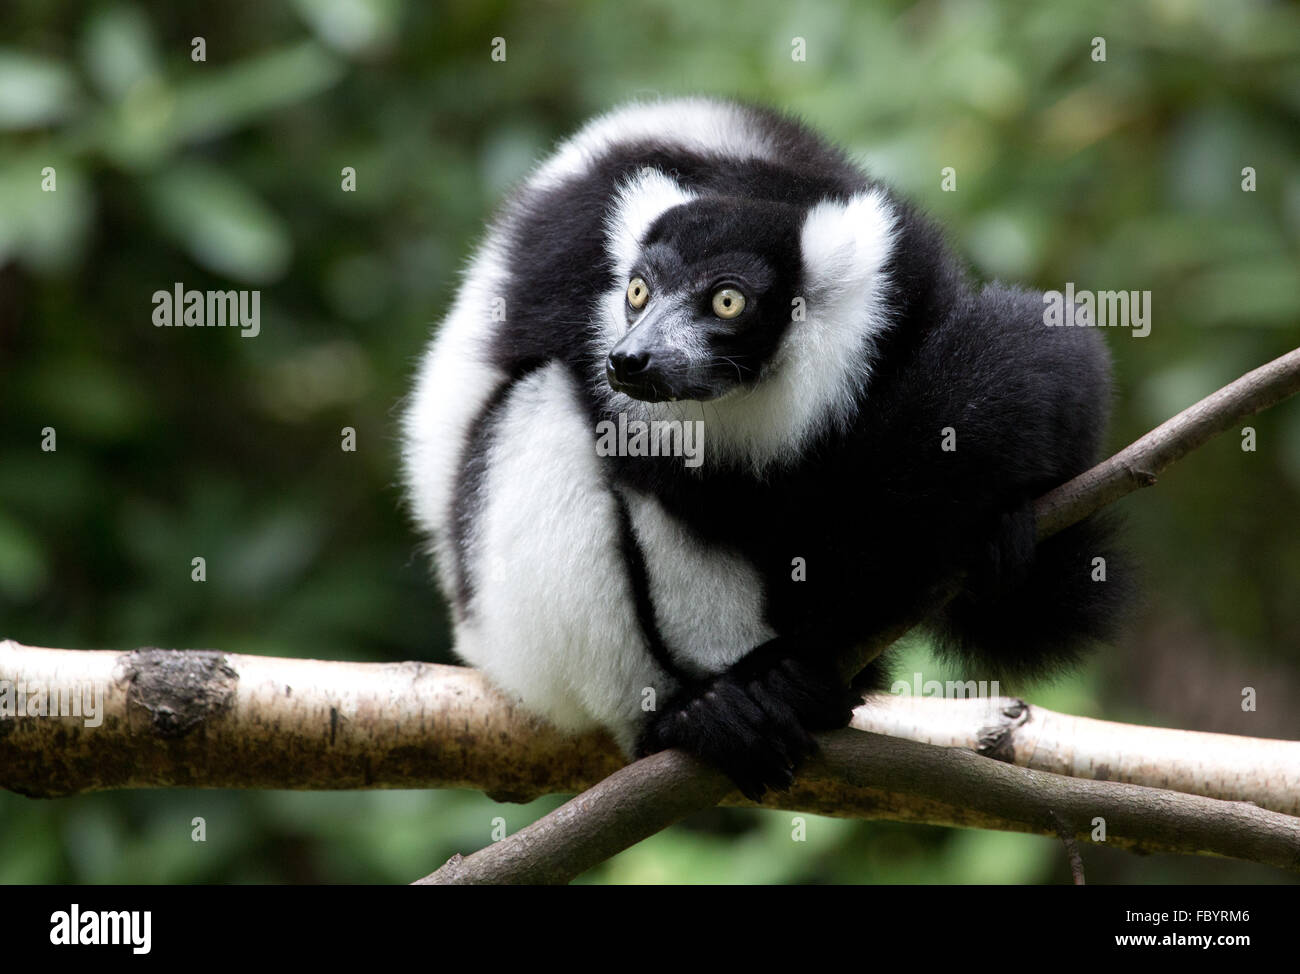 black and white monkey Stock Photo